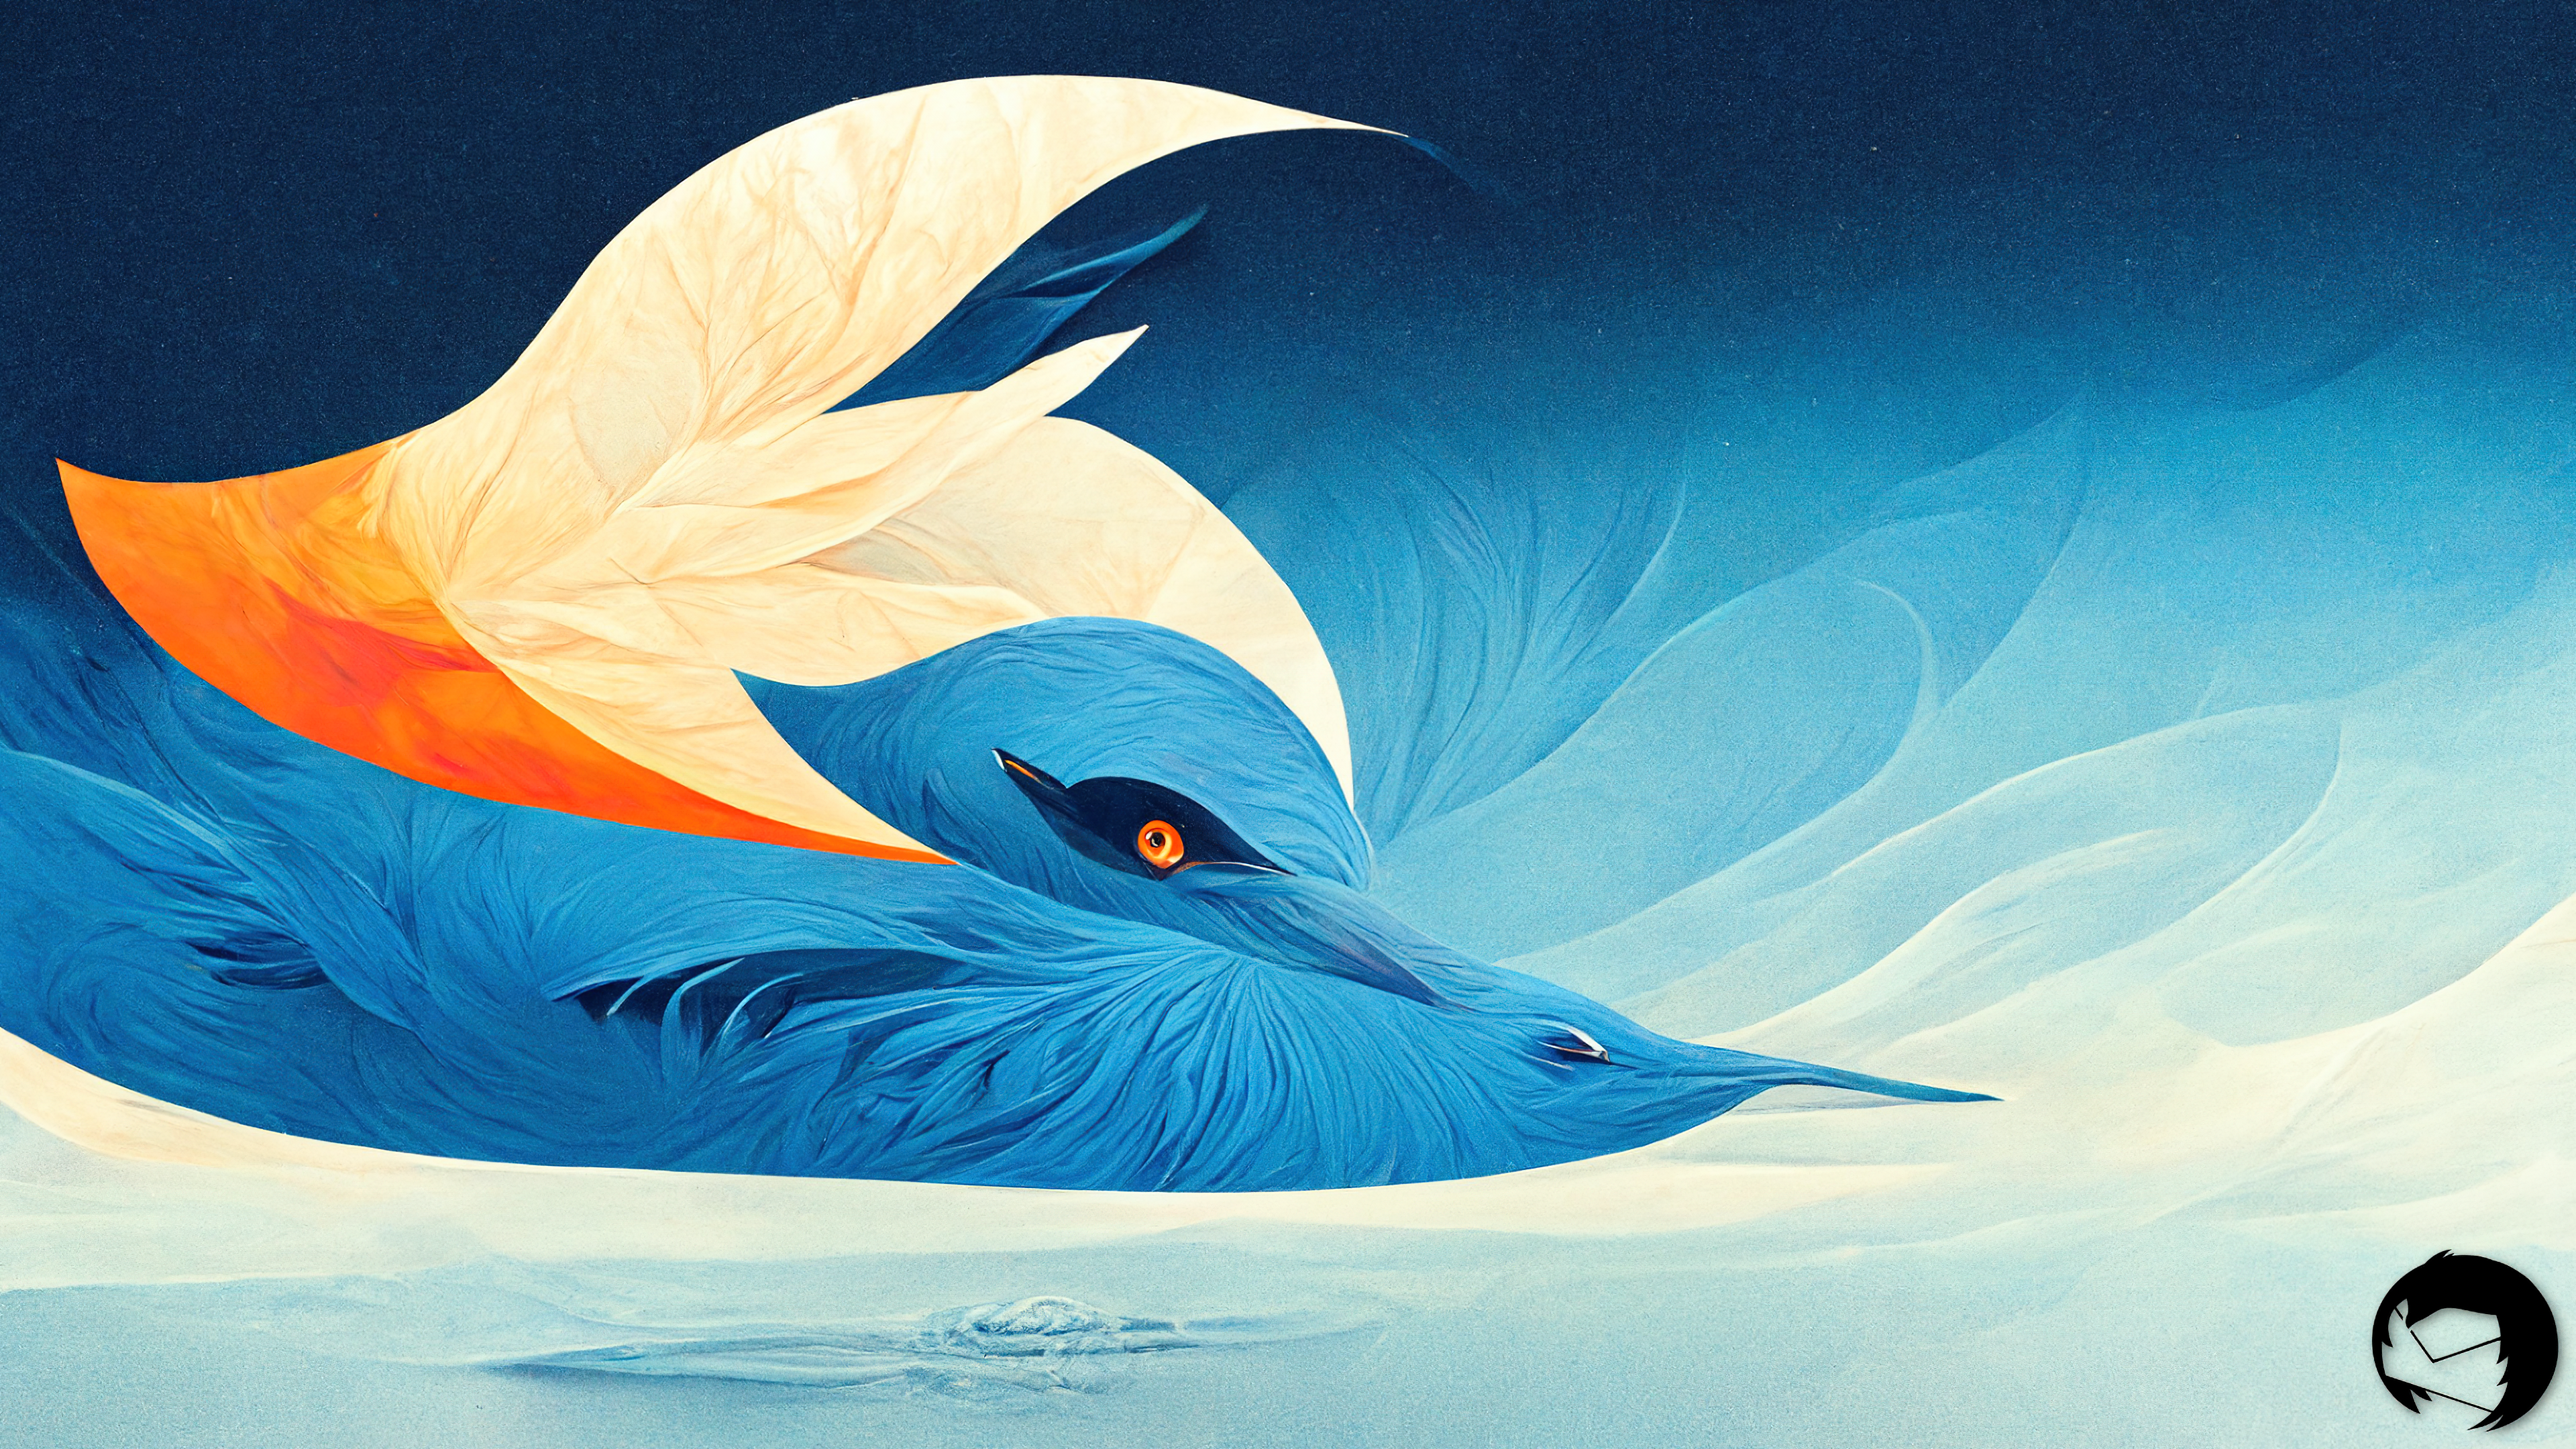 Firefox Thunderbird Snow Wallpaper Upscaled